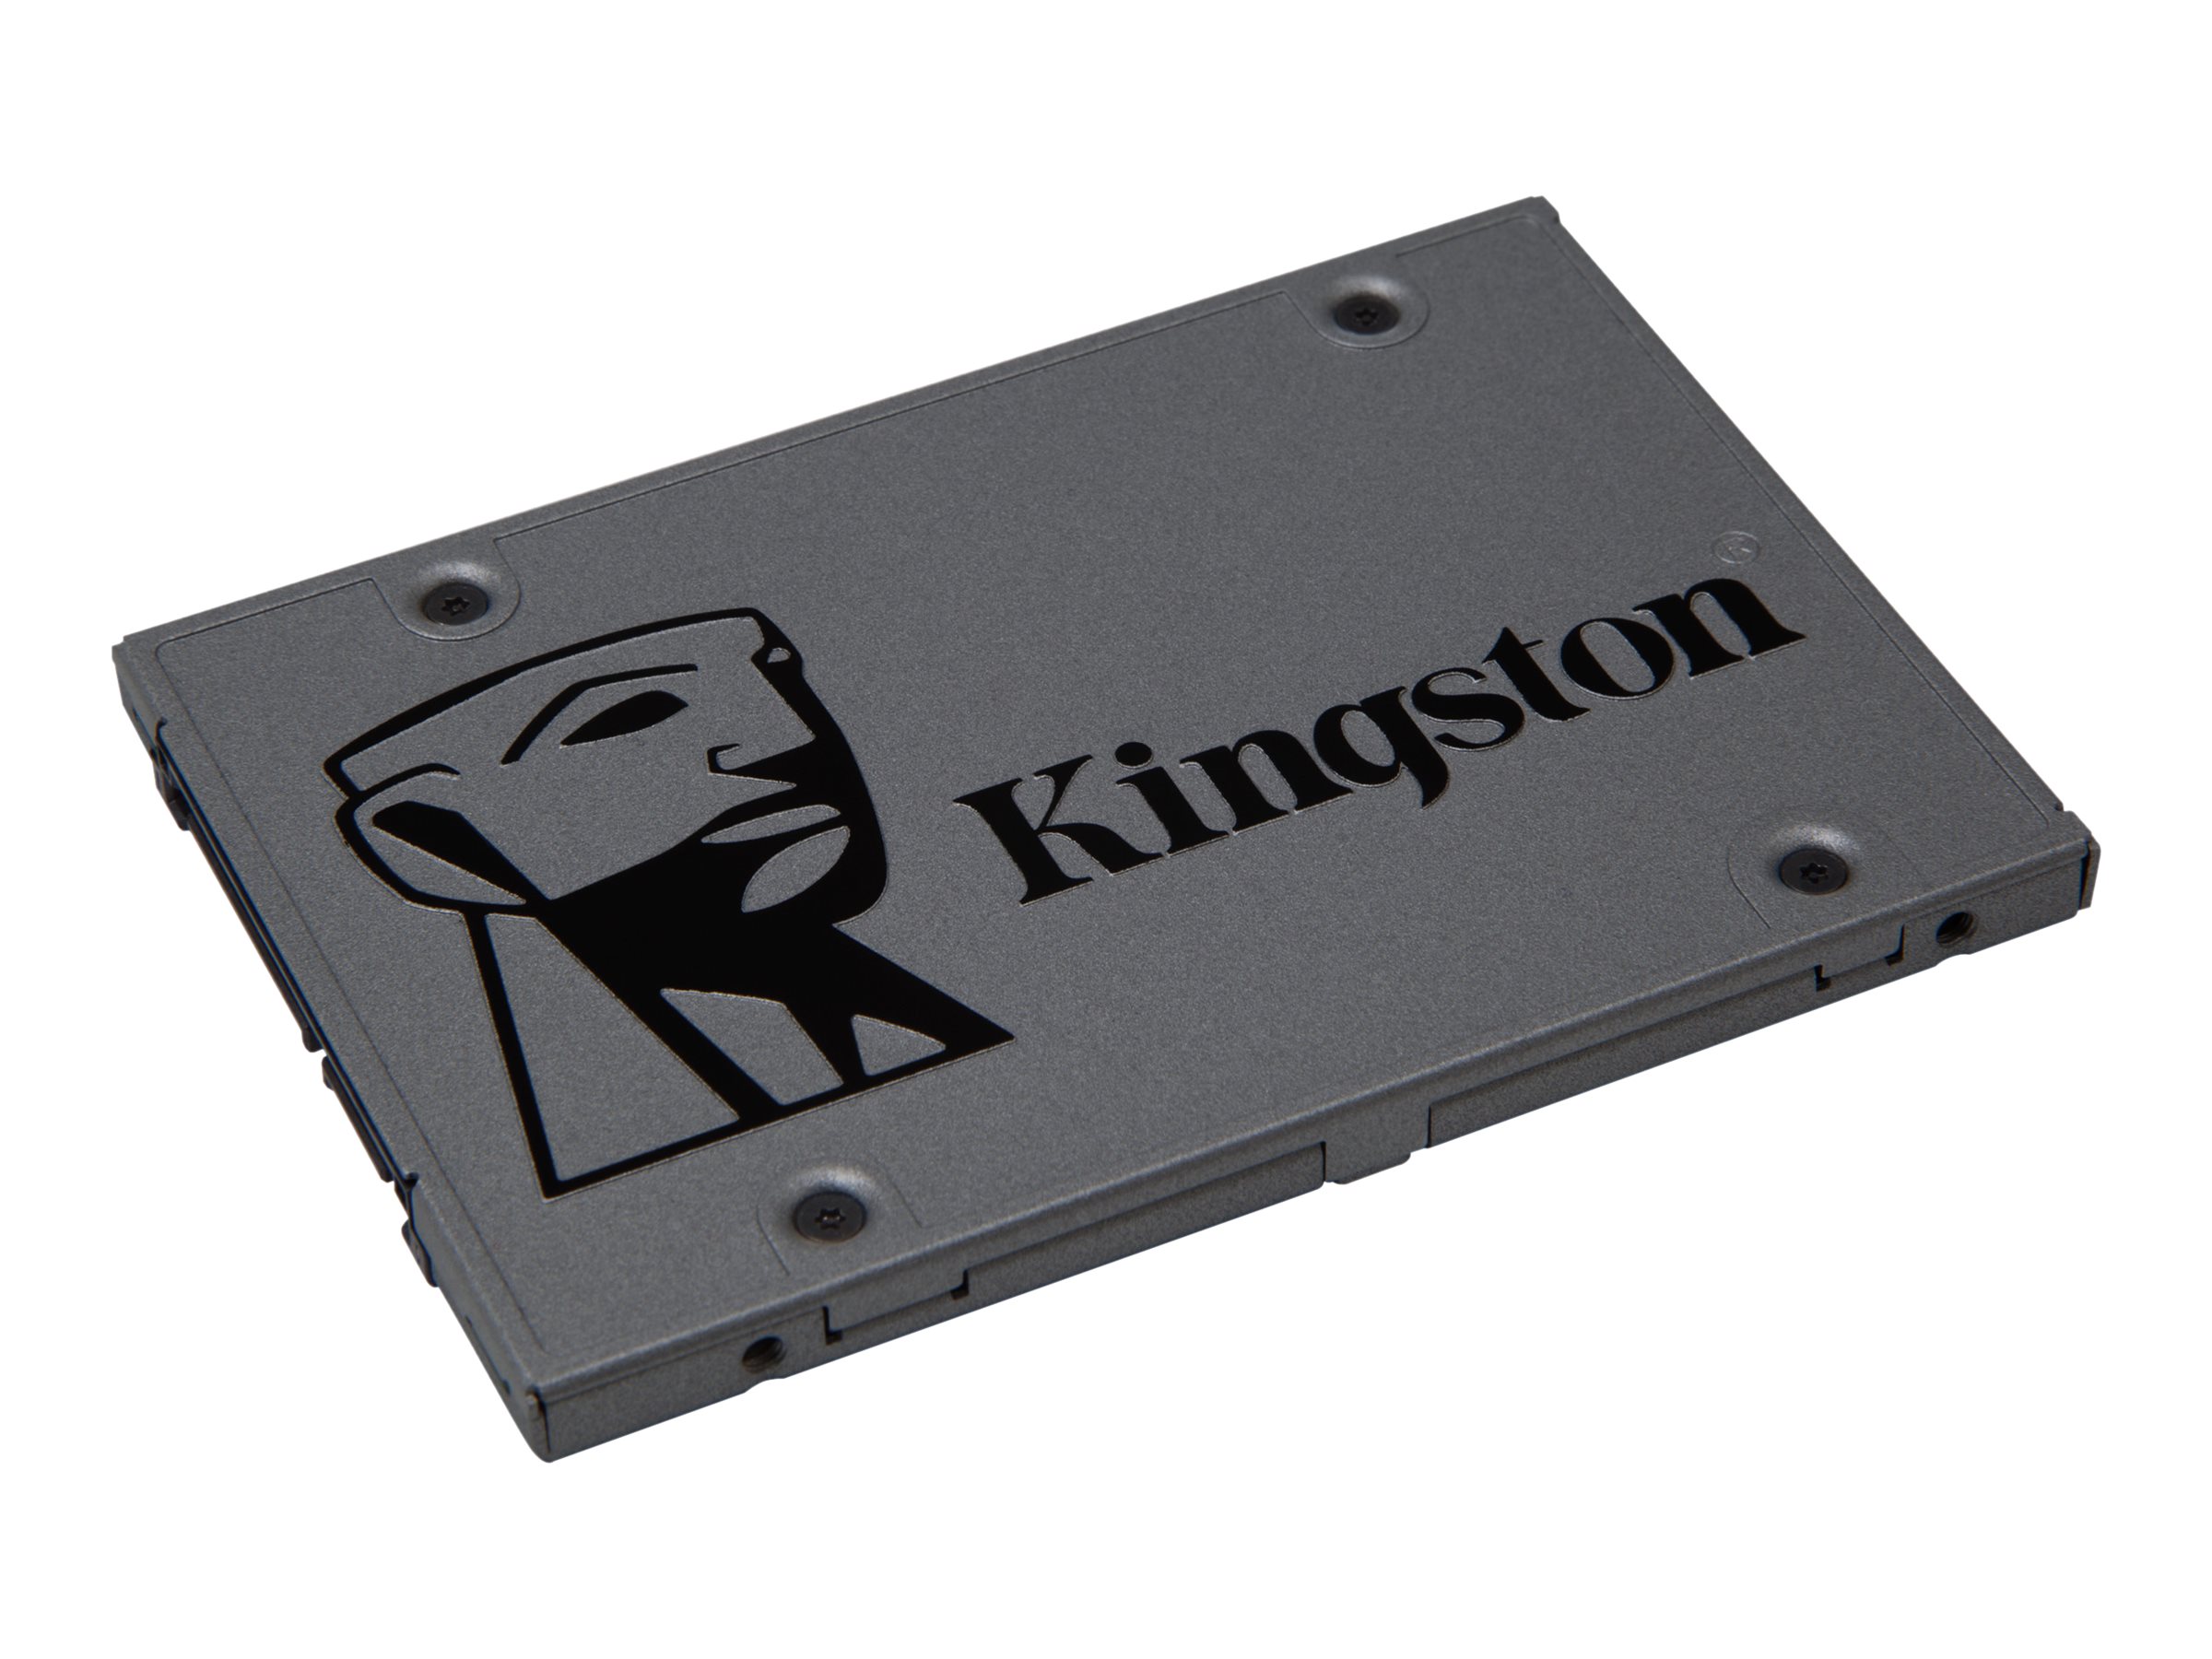 Kingston UV500 - SSD - verschlsselt - 480 GB - intern - 2.5